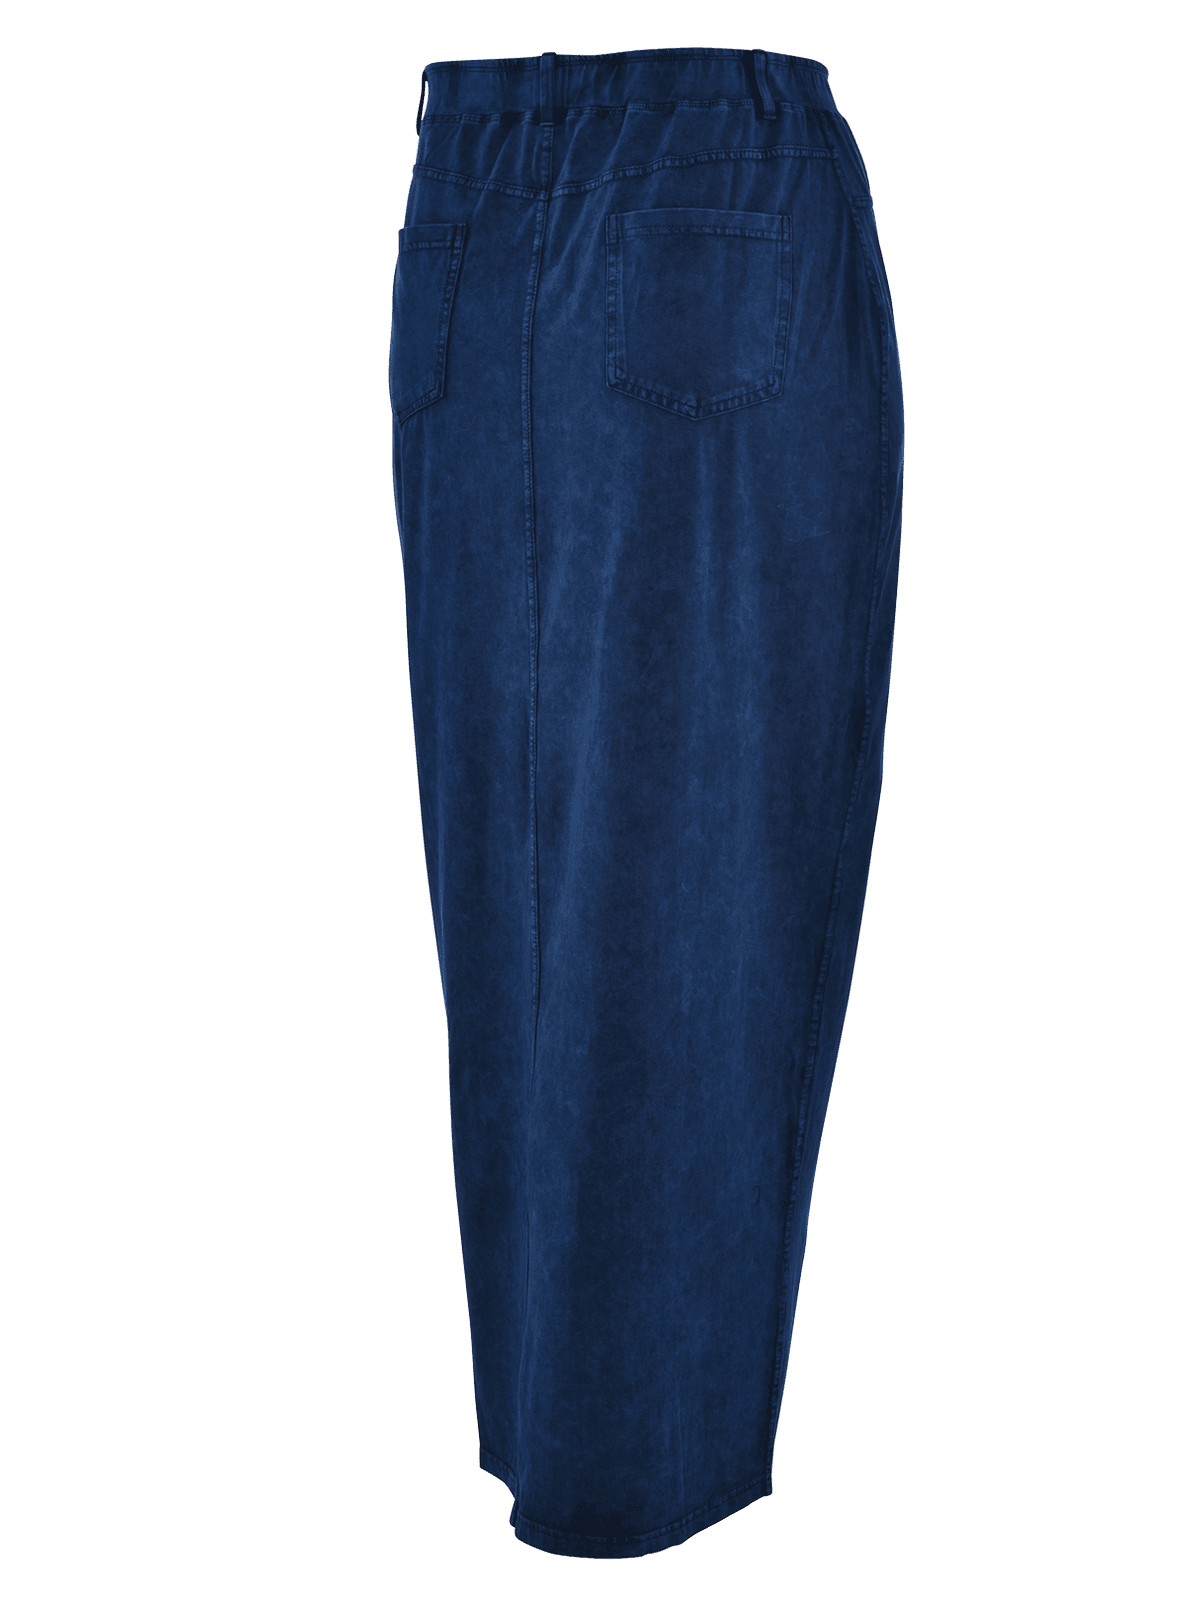 Monogram Patch Long Denim Skirt - Men - OBSOLETES DO NOT TOUCH